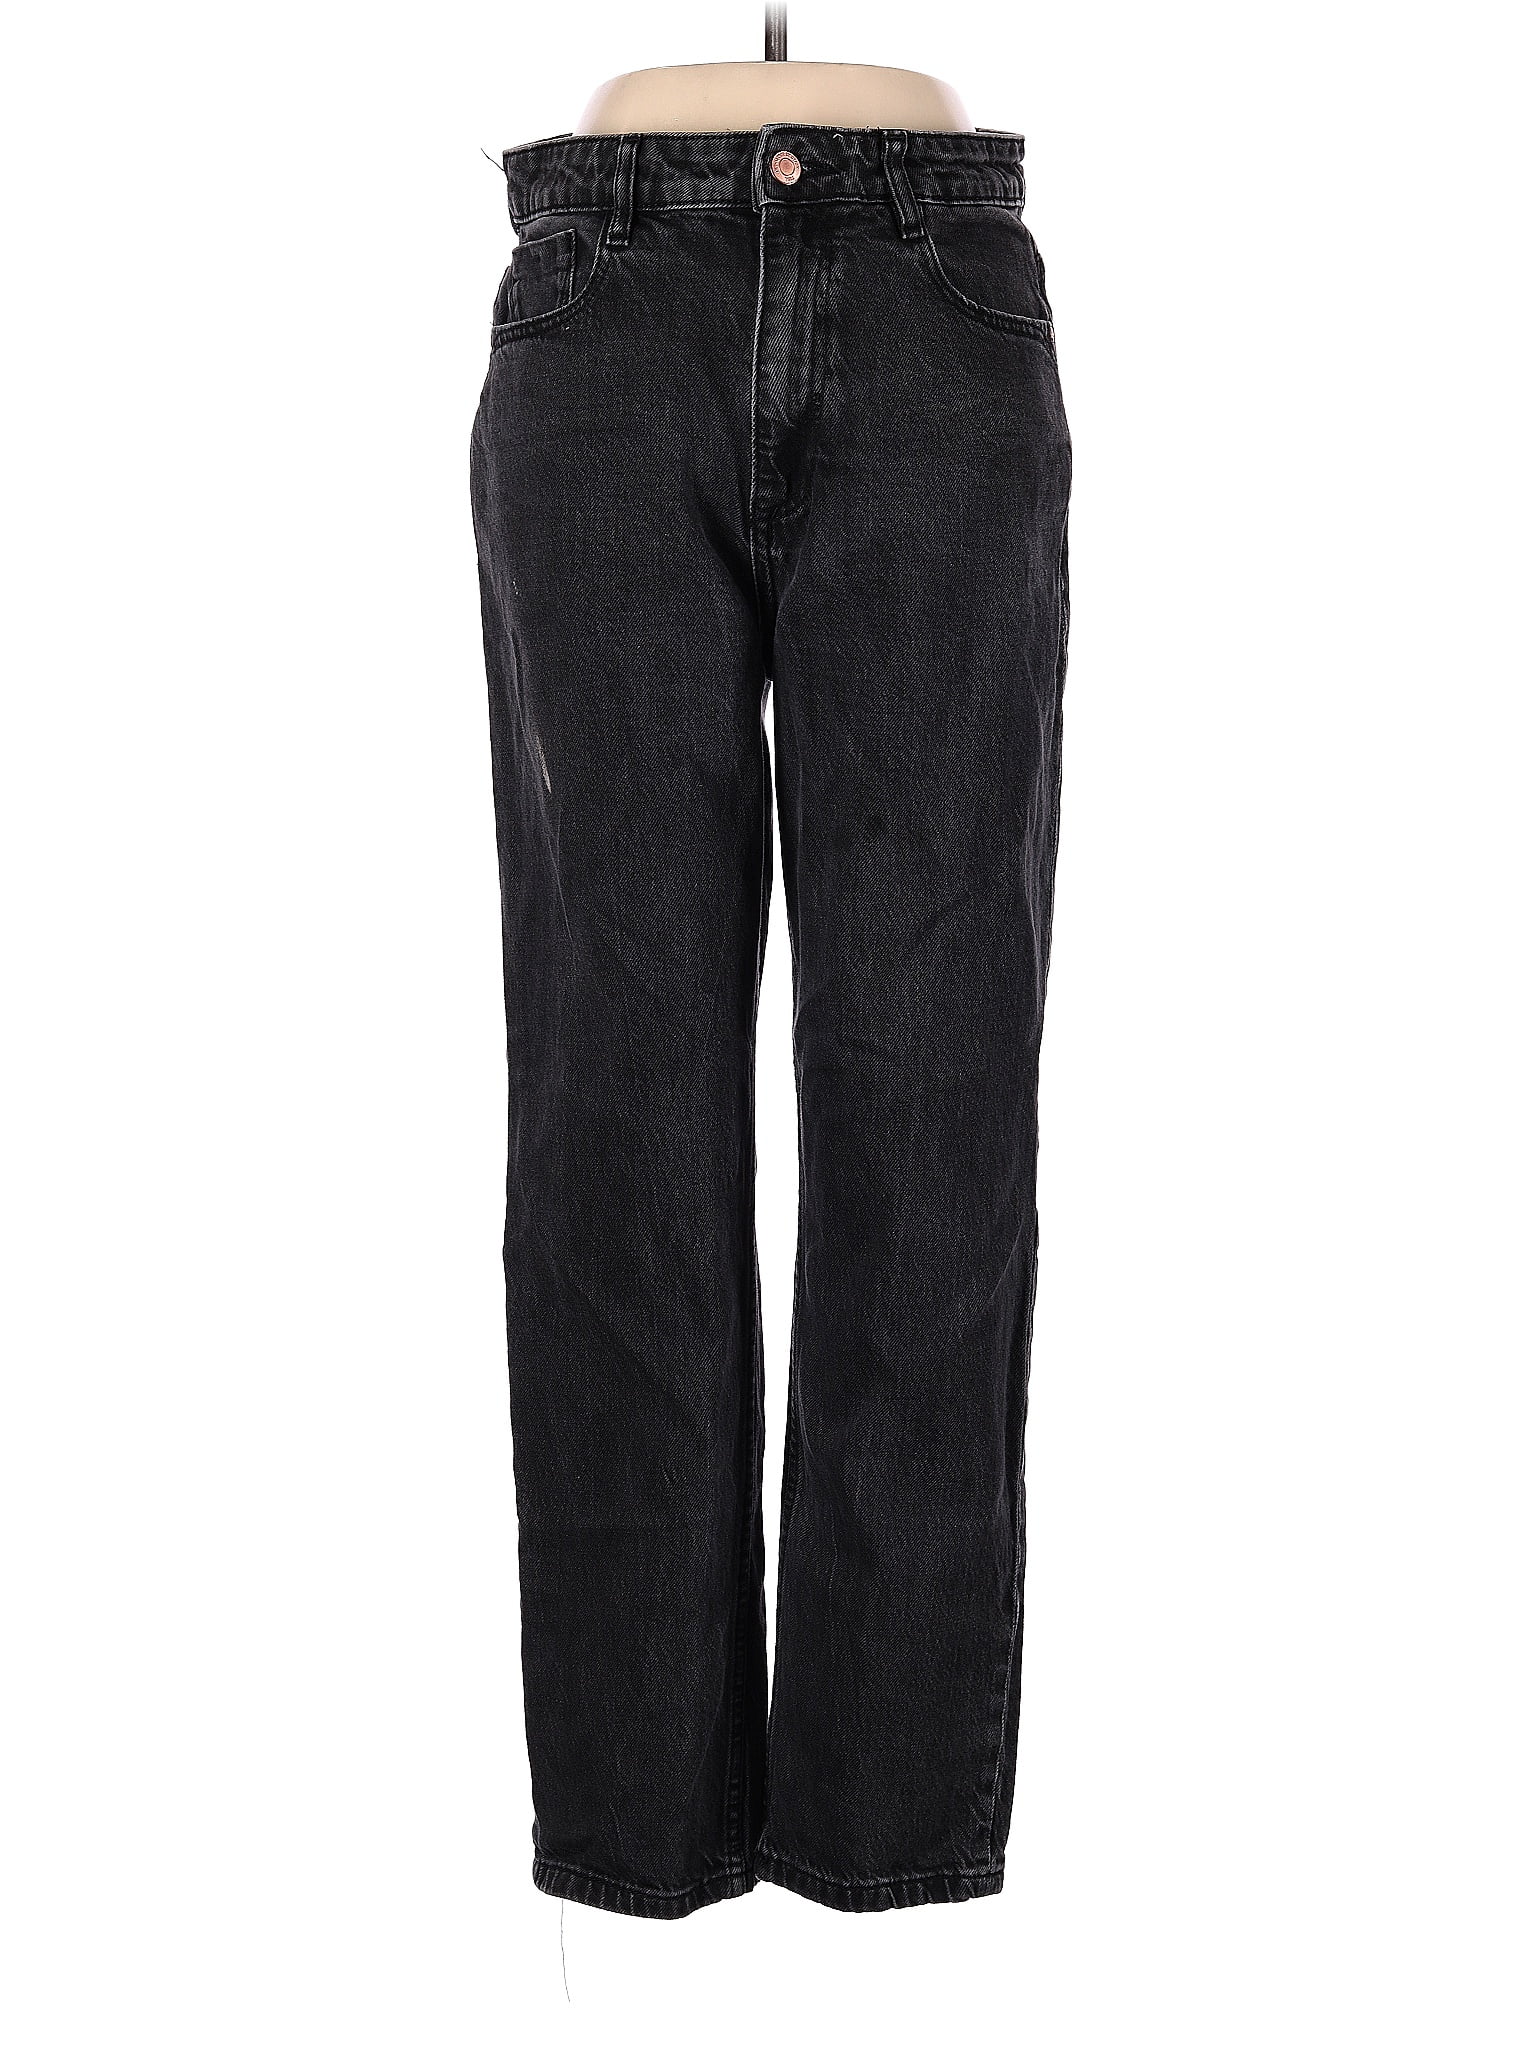 Zara Solid Black Jeans Size 8 - 44% off | ThredUp